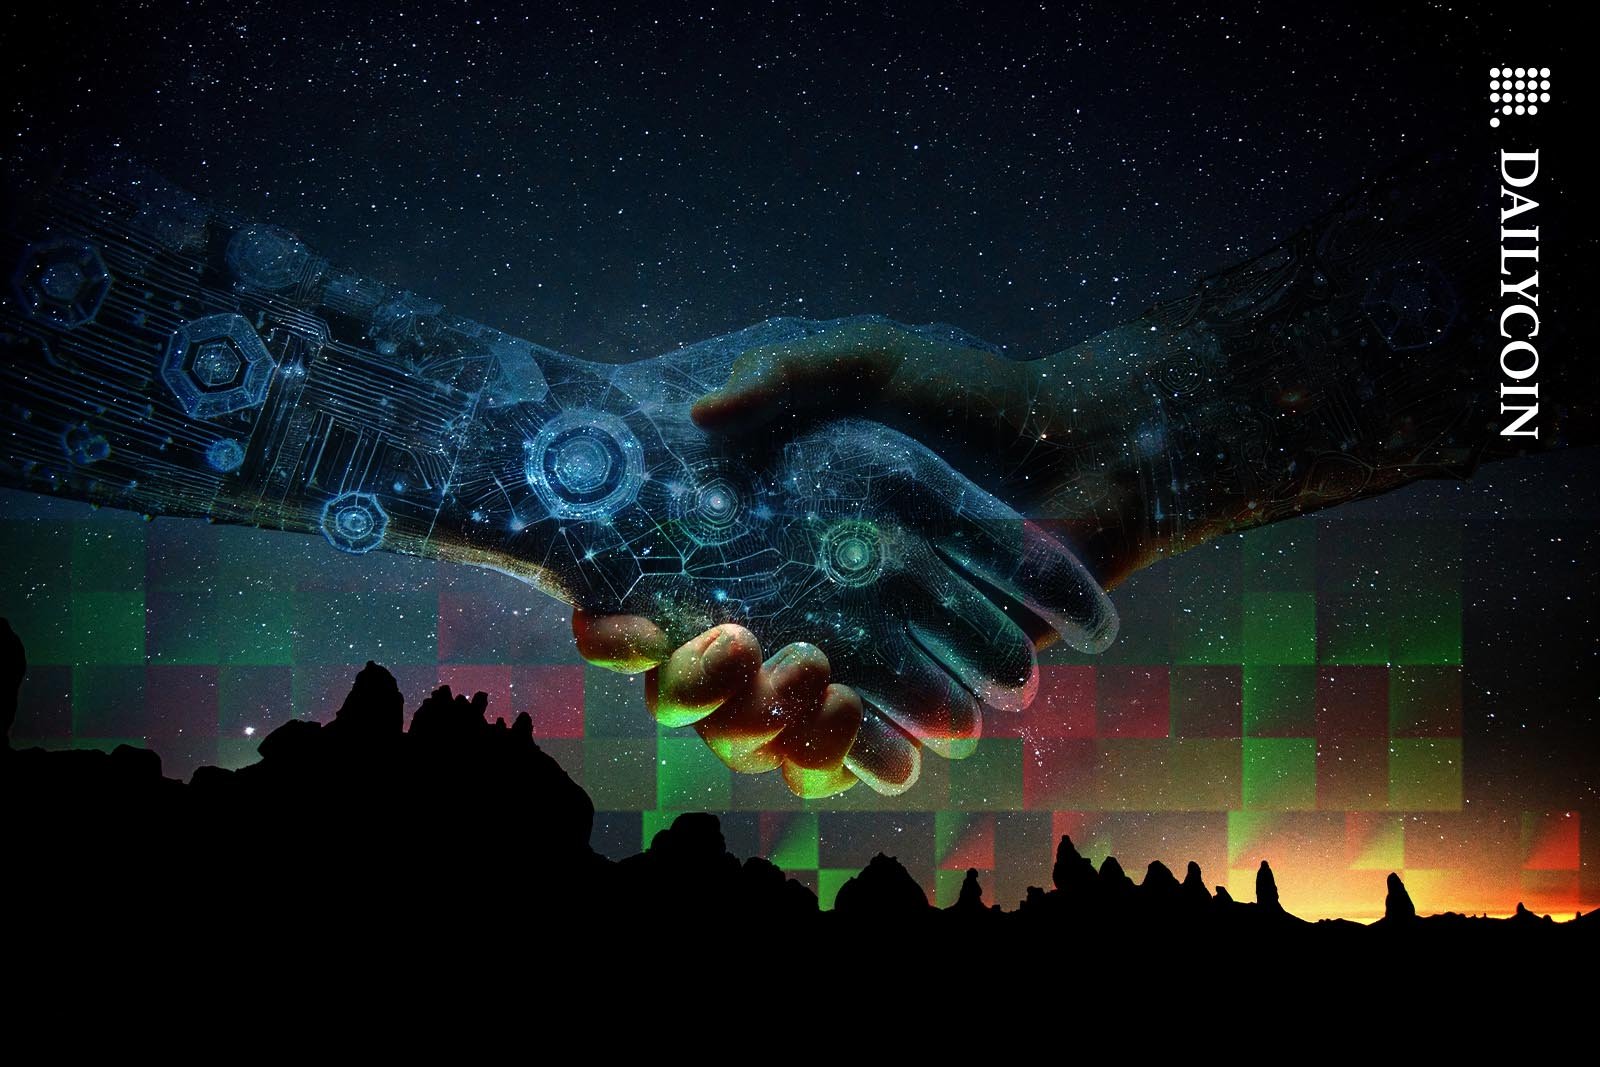 A digital handshake on the night sky.